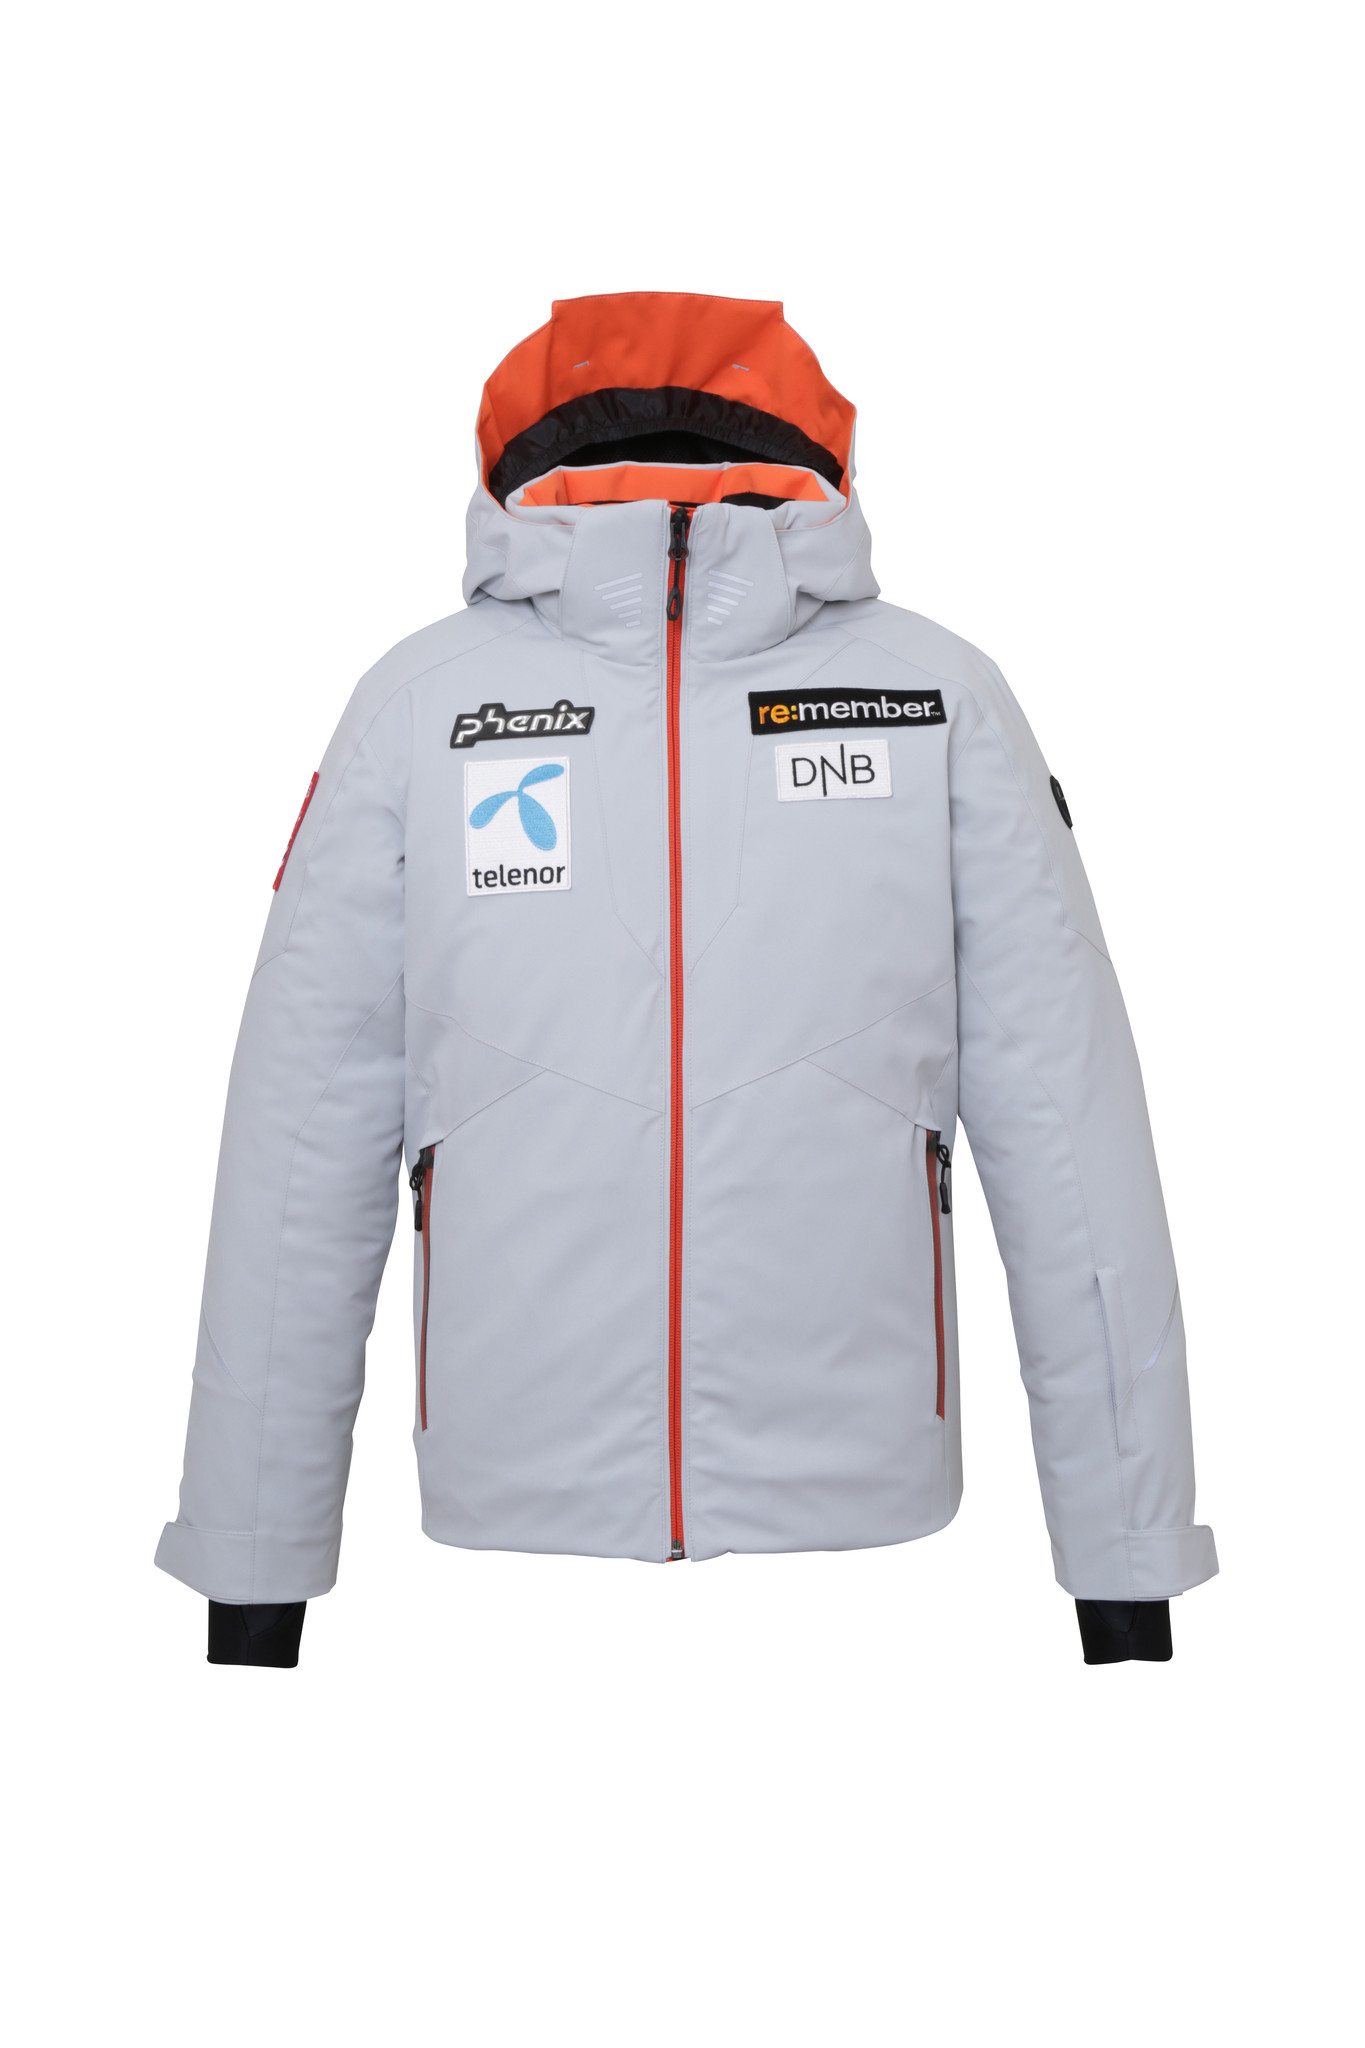 PhenixNo新品タグ付き\nPhenix Norway Team Model jacket